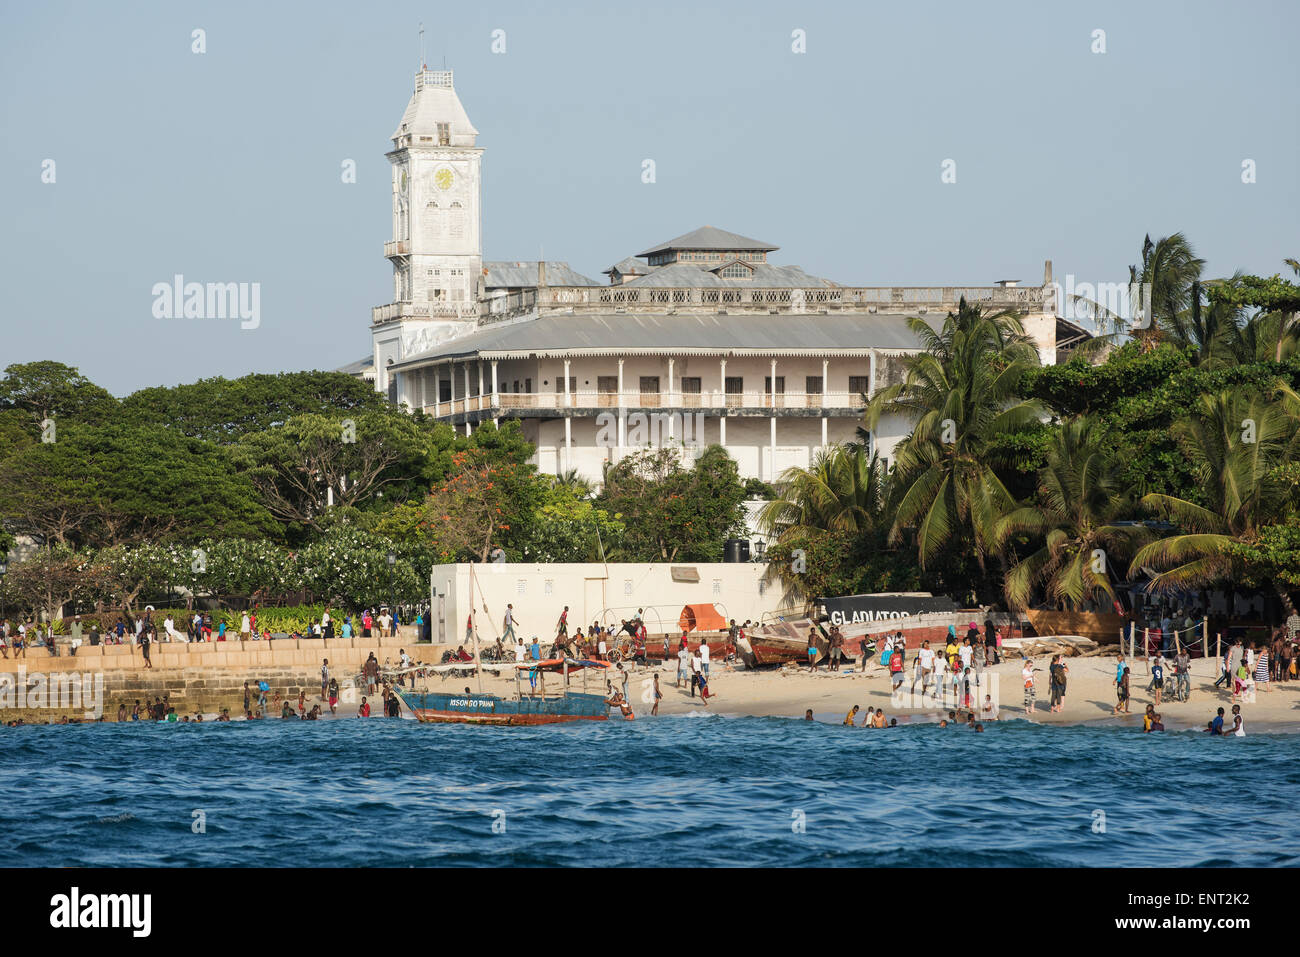 View from the sea to the town, beach and the House of Wonders, Stone Town, Zanzibar, Unguja, Zanzibar Archipelago, Tanzania Stock Photo